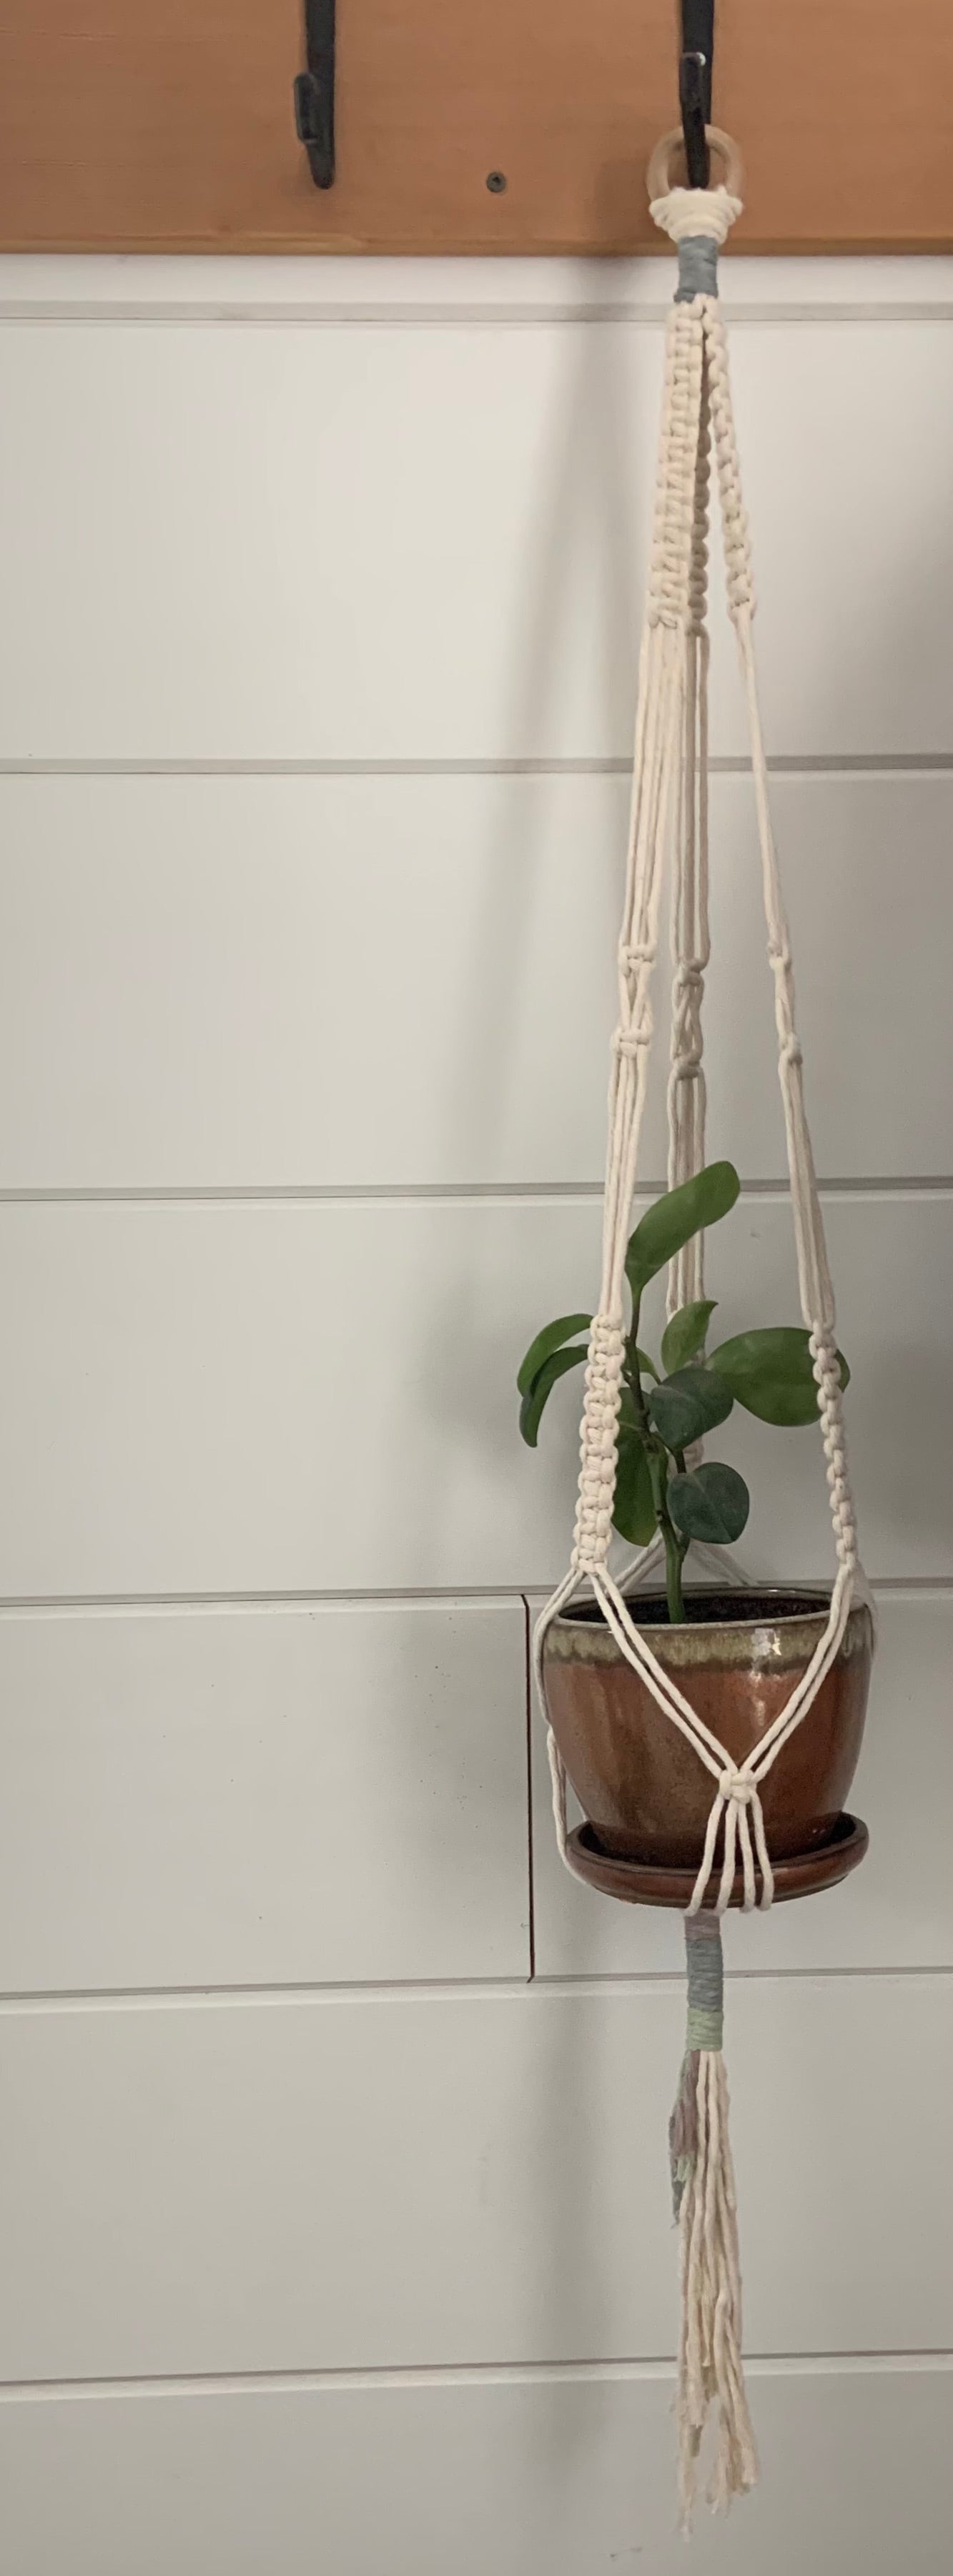 Plant Hanger - Cool